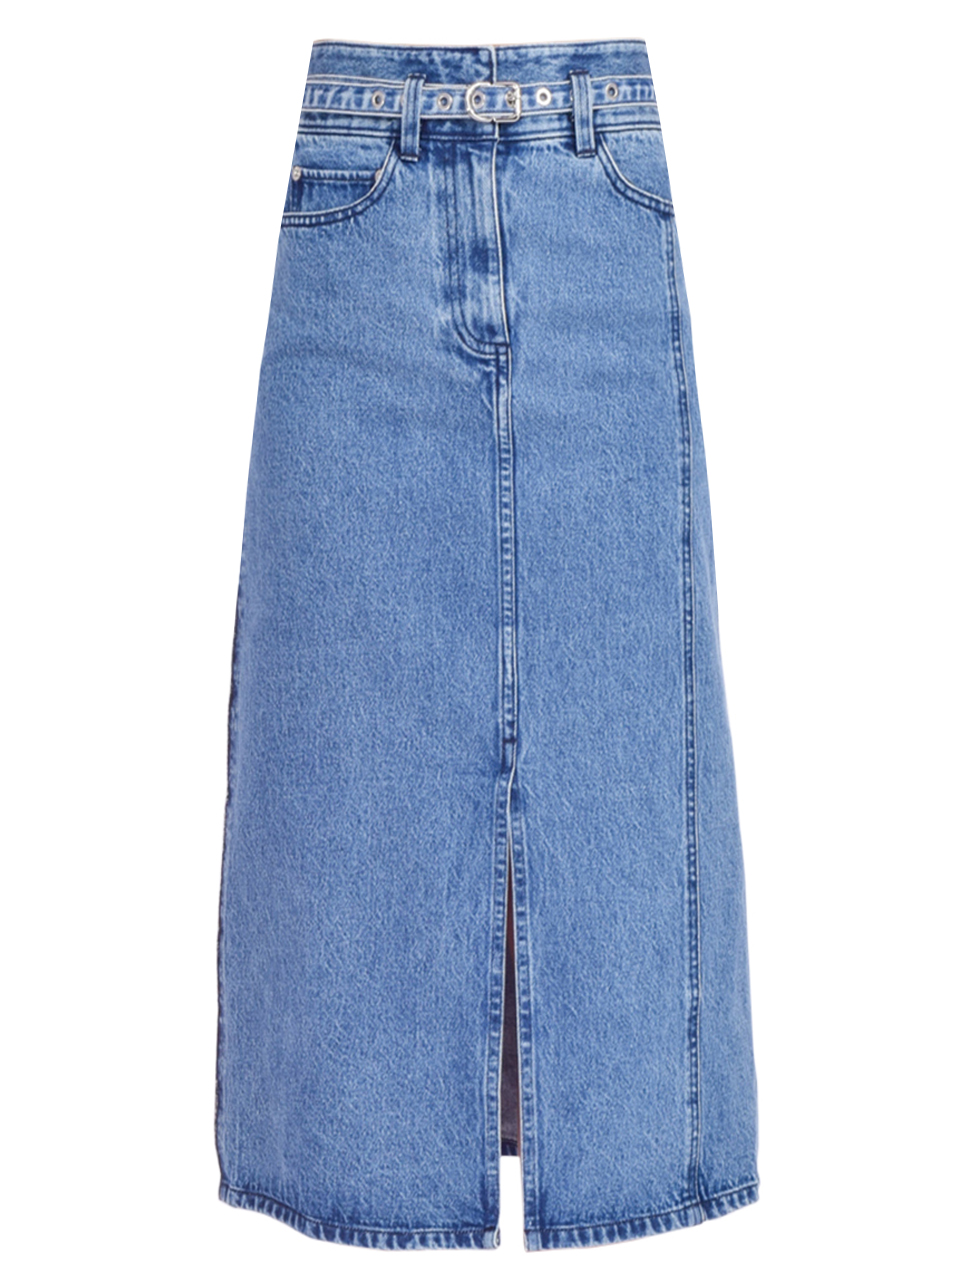 3.1 Phillip Lim Denim A-Line Skirt in Blue Product Shot 